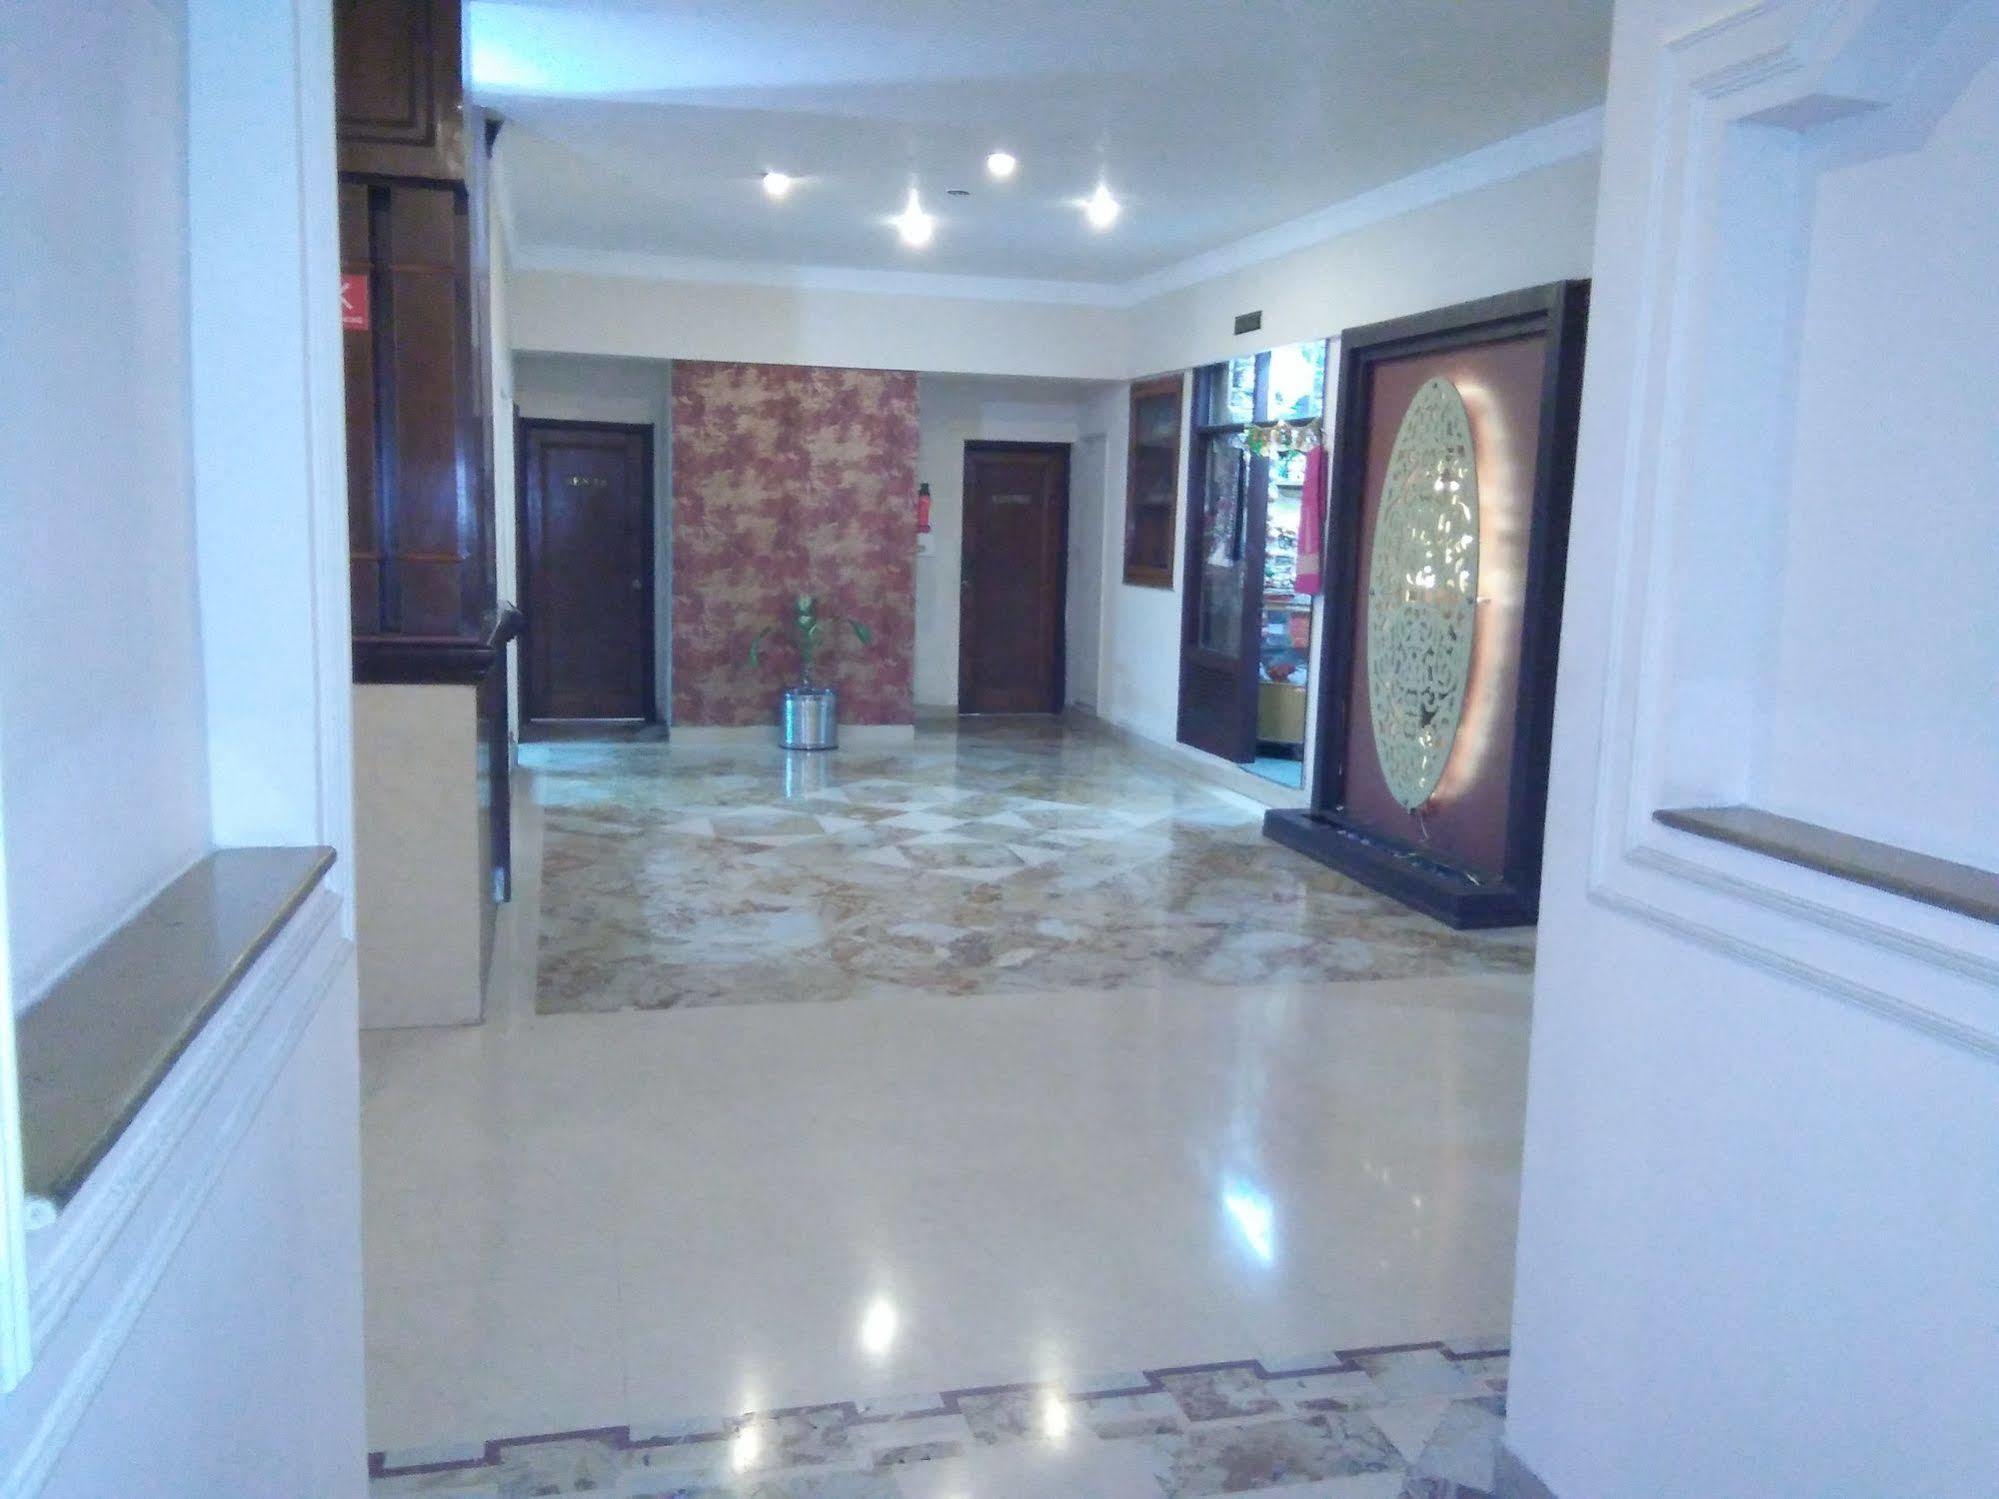 Hotel Asia Vaishnodevi Katra  Exterior photo